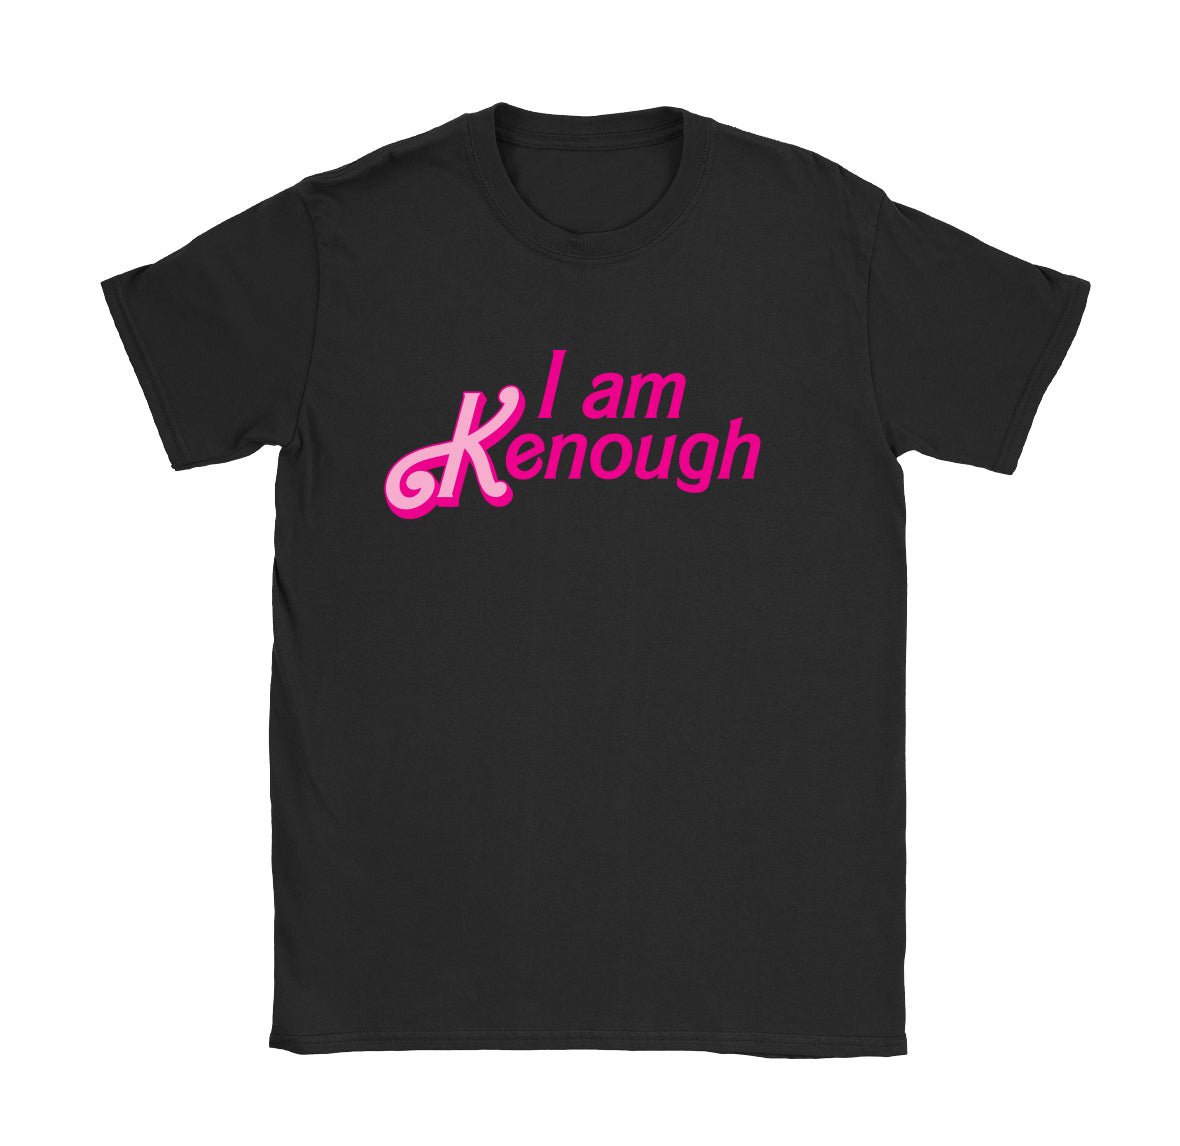 I am Kenough - Black Cat MFG - T-Shirt